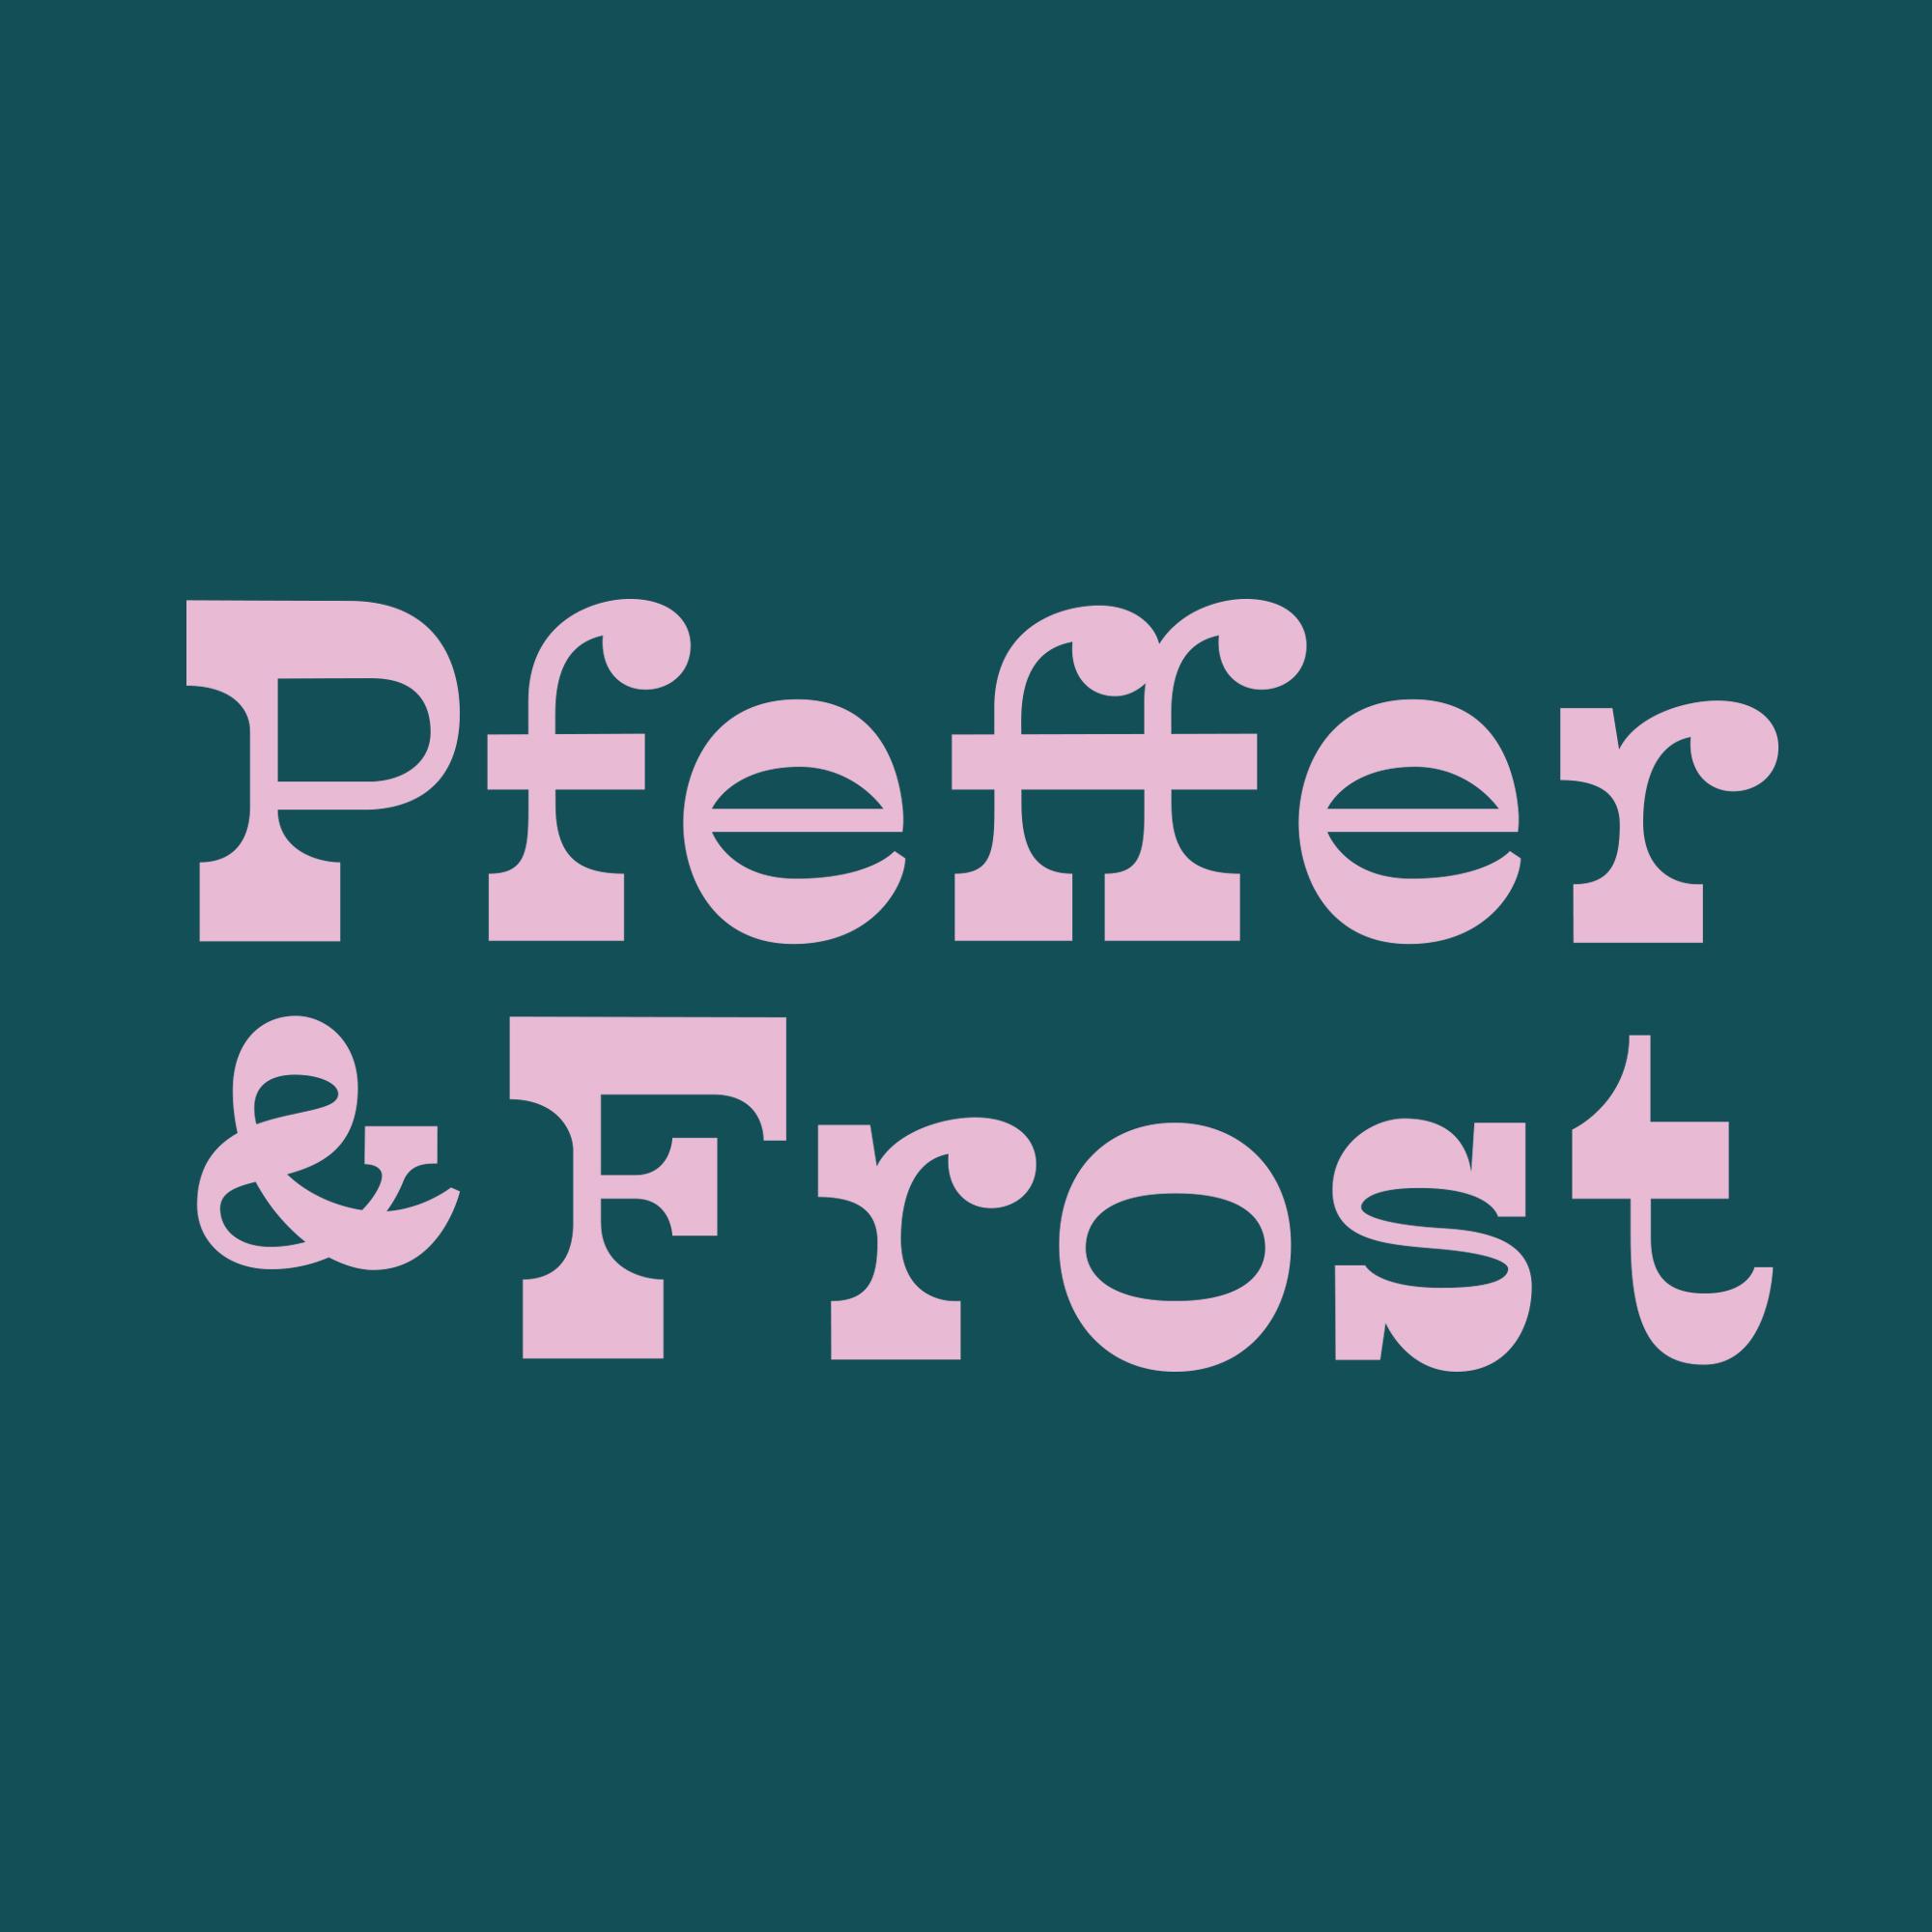 Pfeffer & Frost Lebkuchen